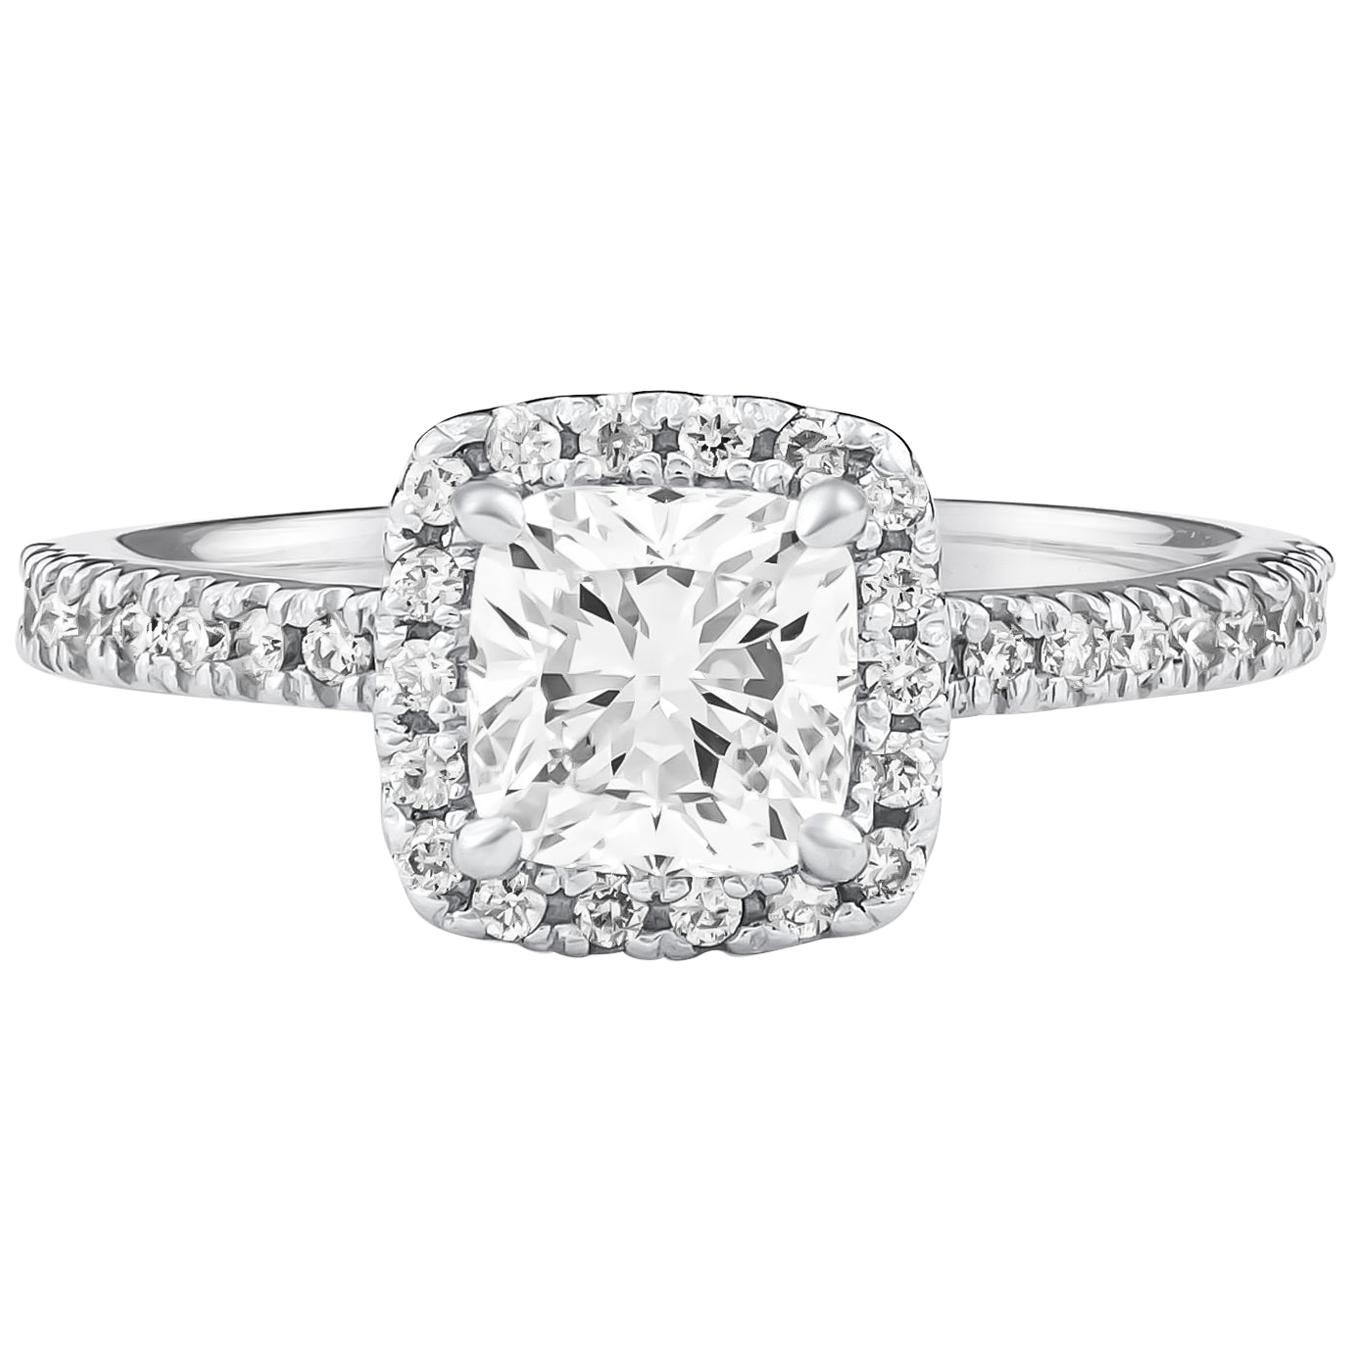 1.01 Cushion Cut ‘GIA’ Diamond Halo Engagement Ring, Platinum